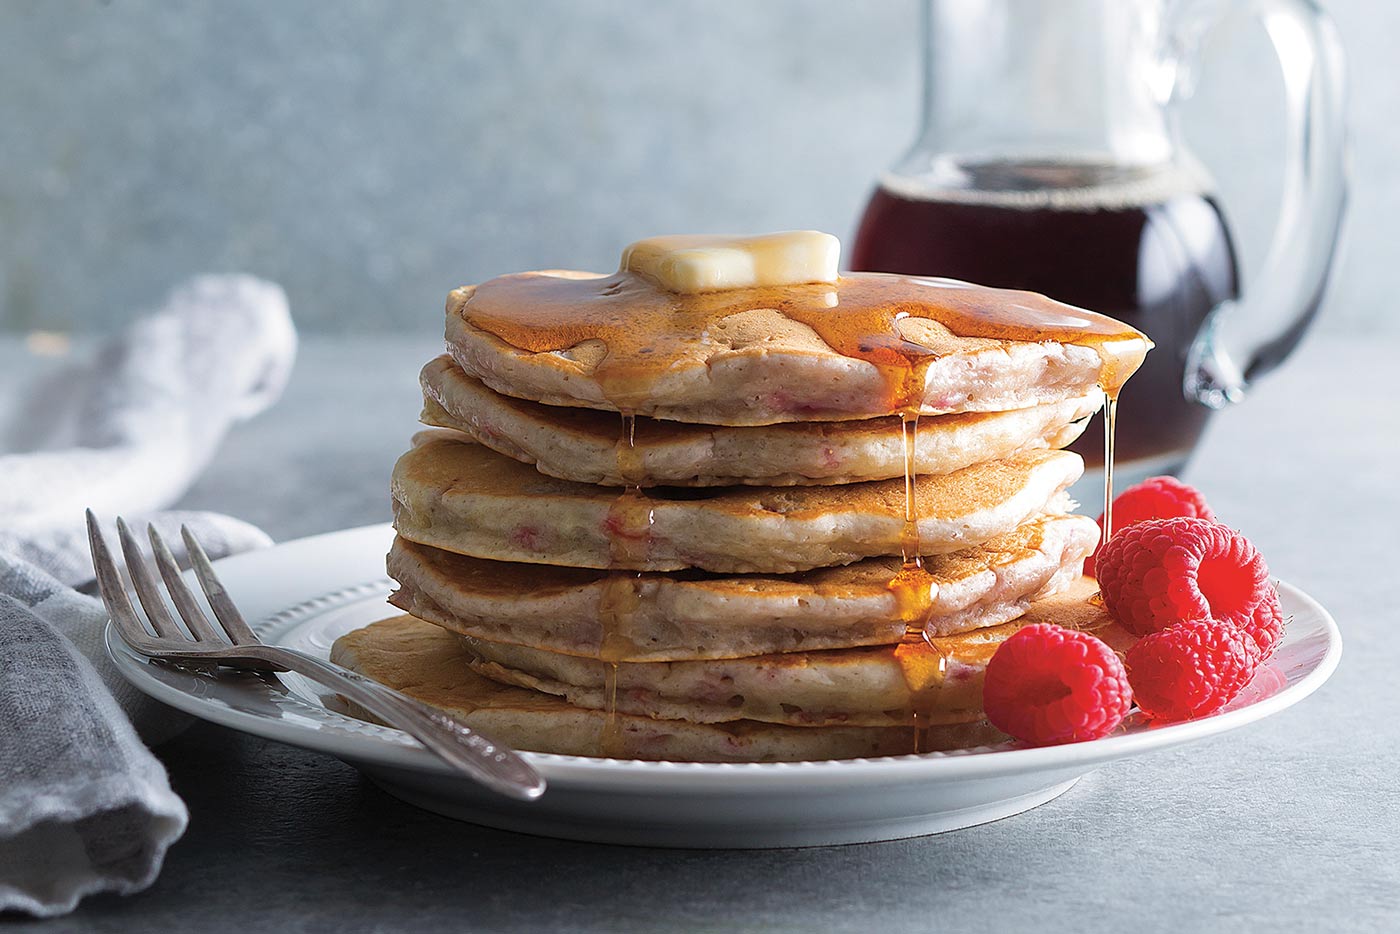 Sour Cream Pancakes with Raspberries